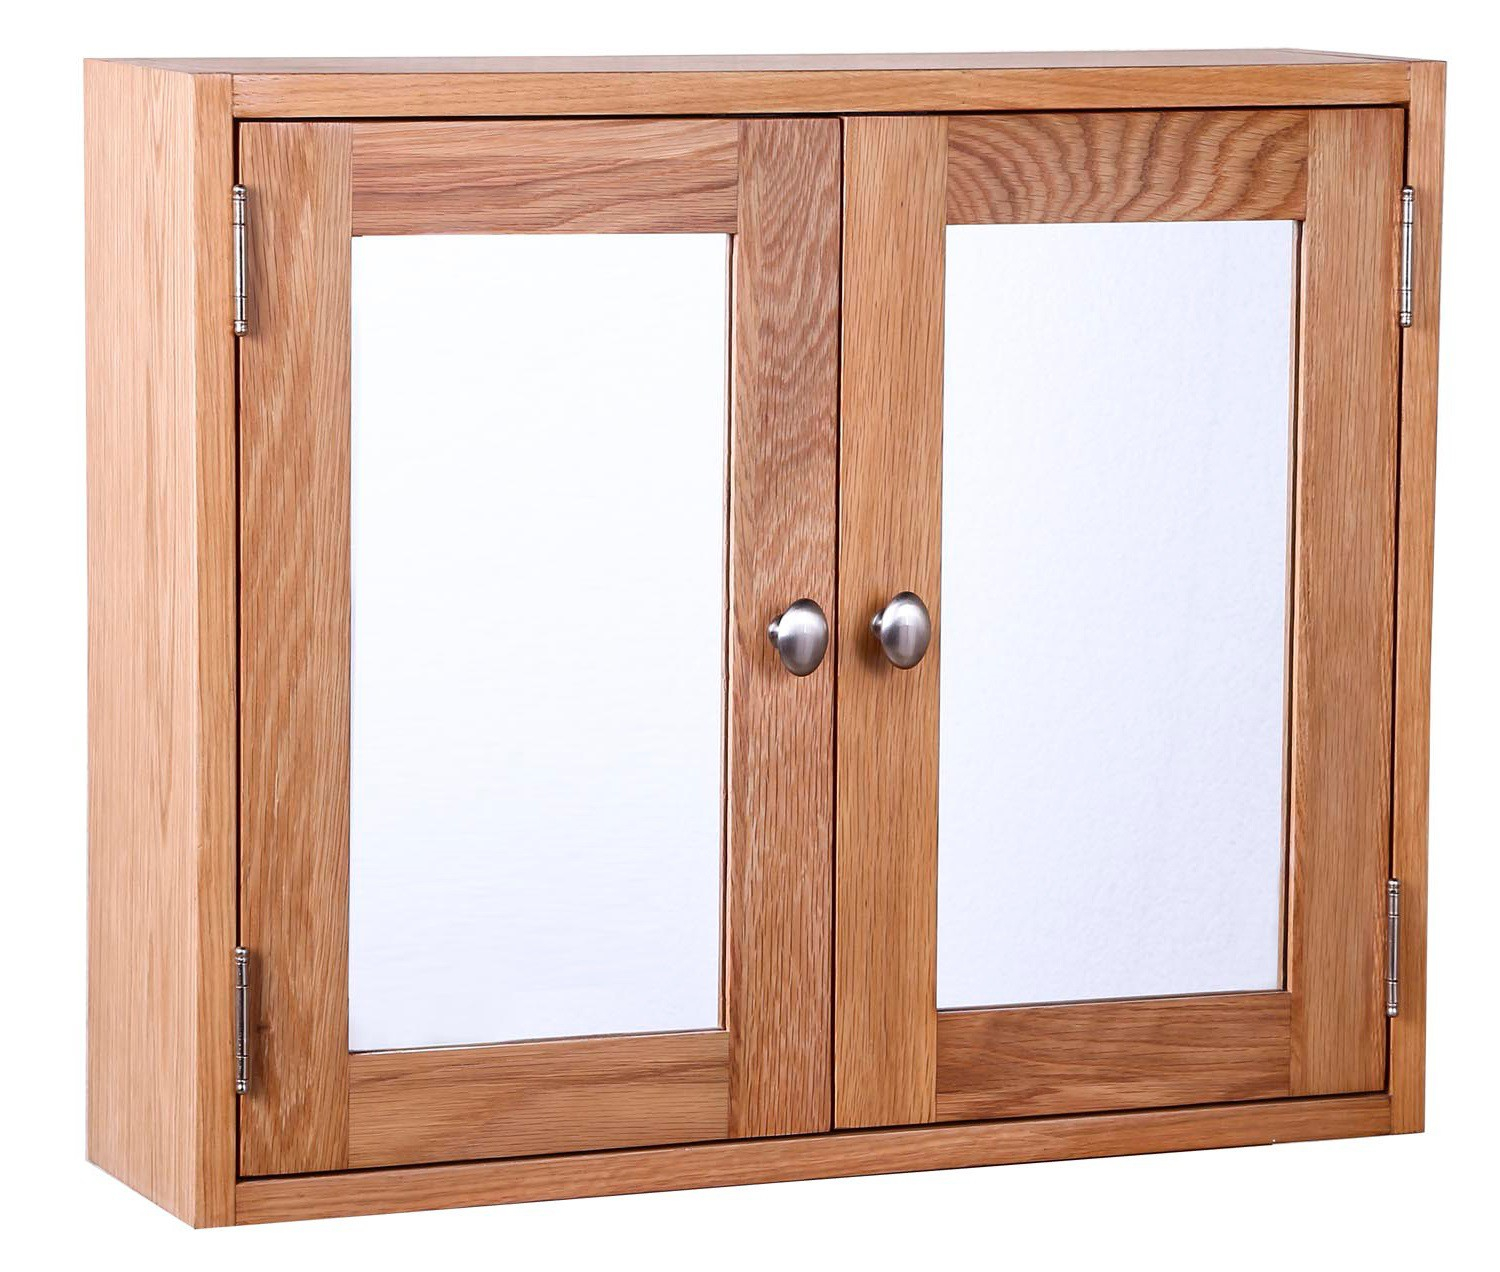 Light Oak Bathroom Storage Cabinet With Mirrors Hallowood regarding sizing 1500 X 1272